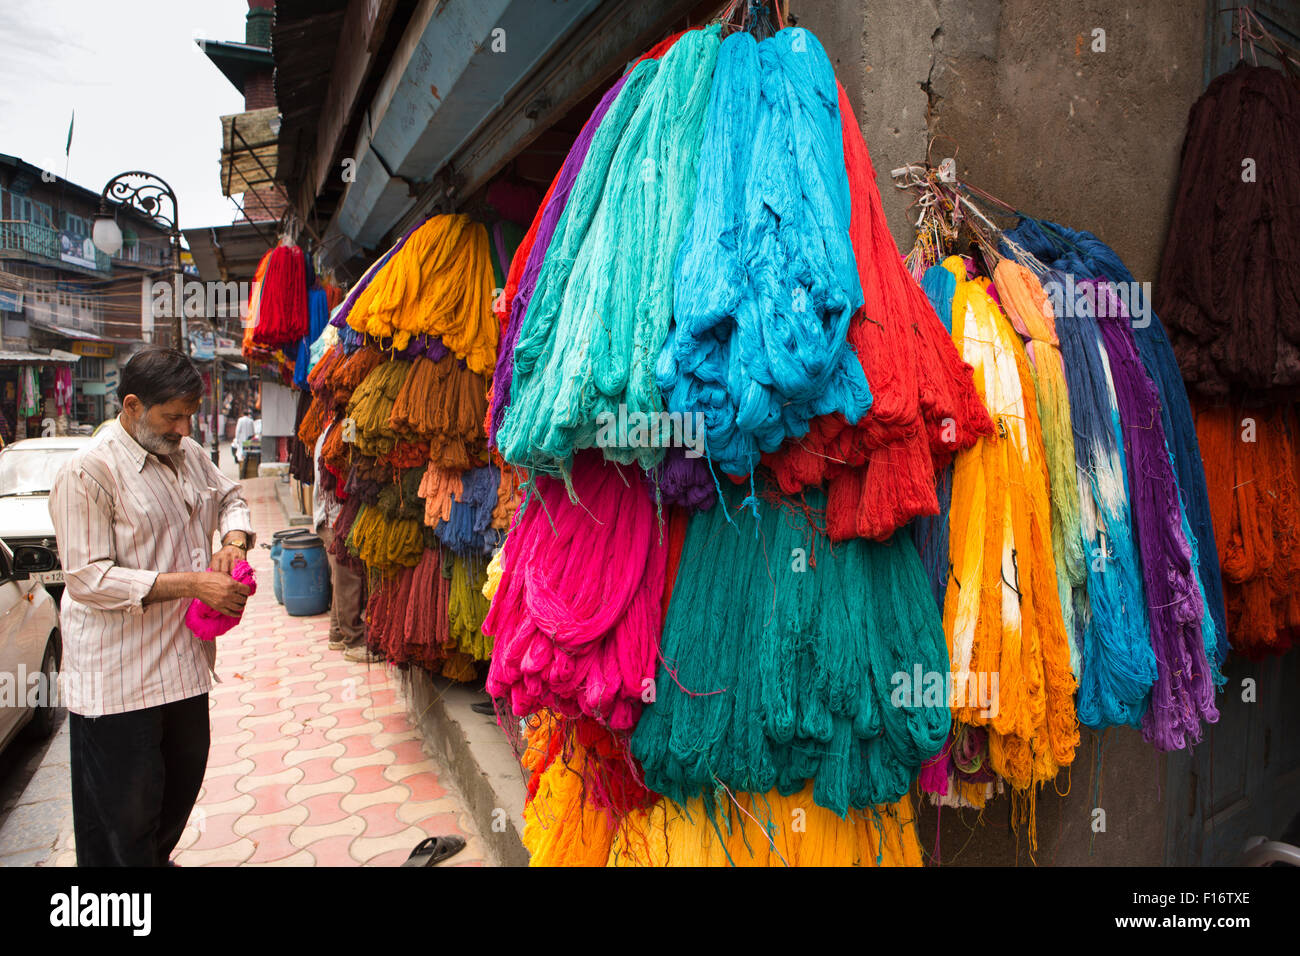 India, Jammu & Kashmir, Srinagar, old city, Khankah i Moulla, hanks of colourful woolen embroidery threads on display Stock Photo